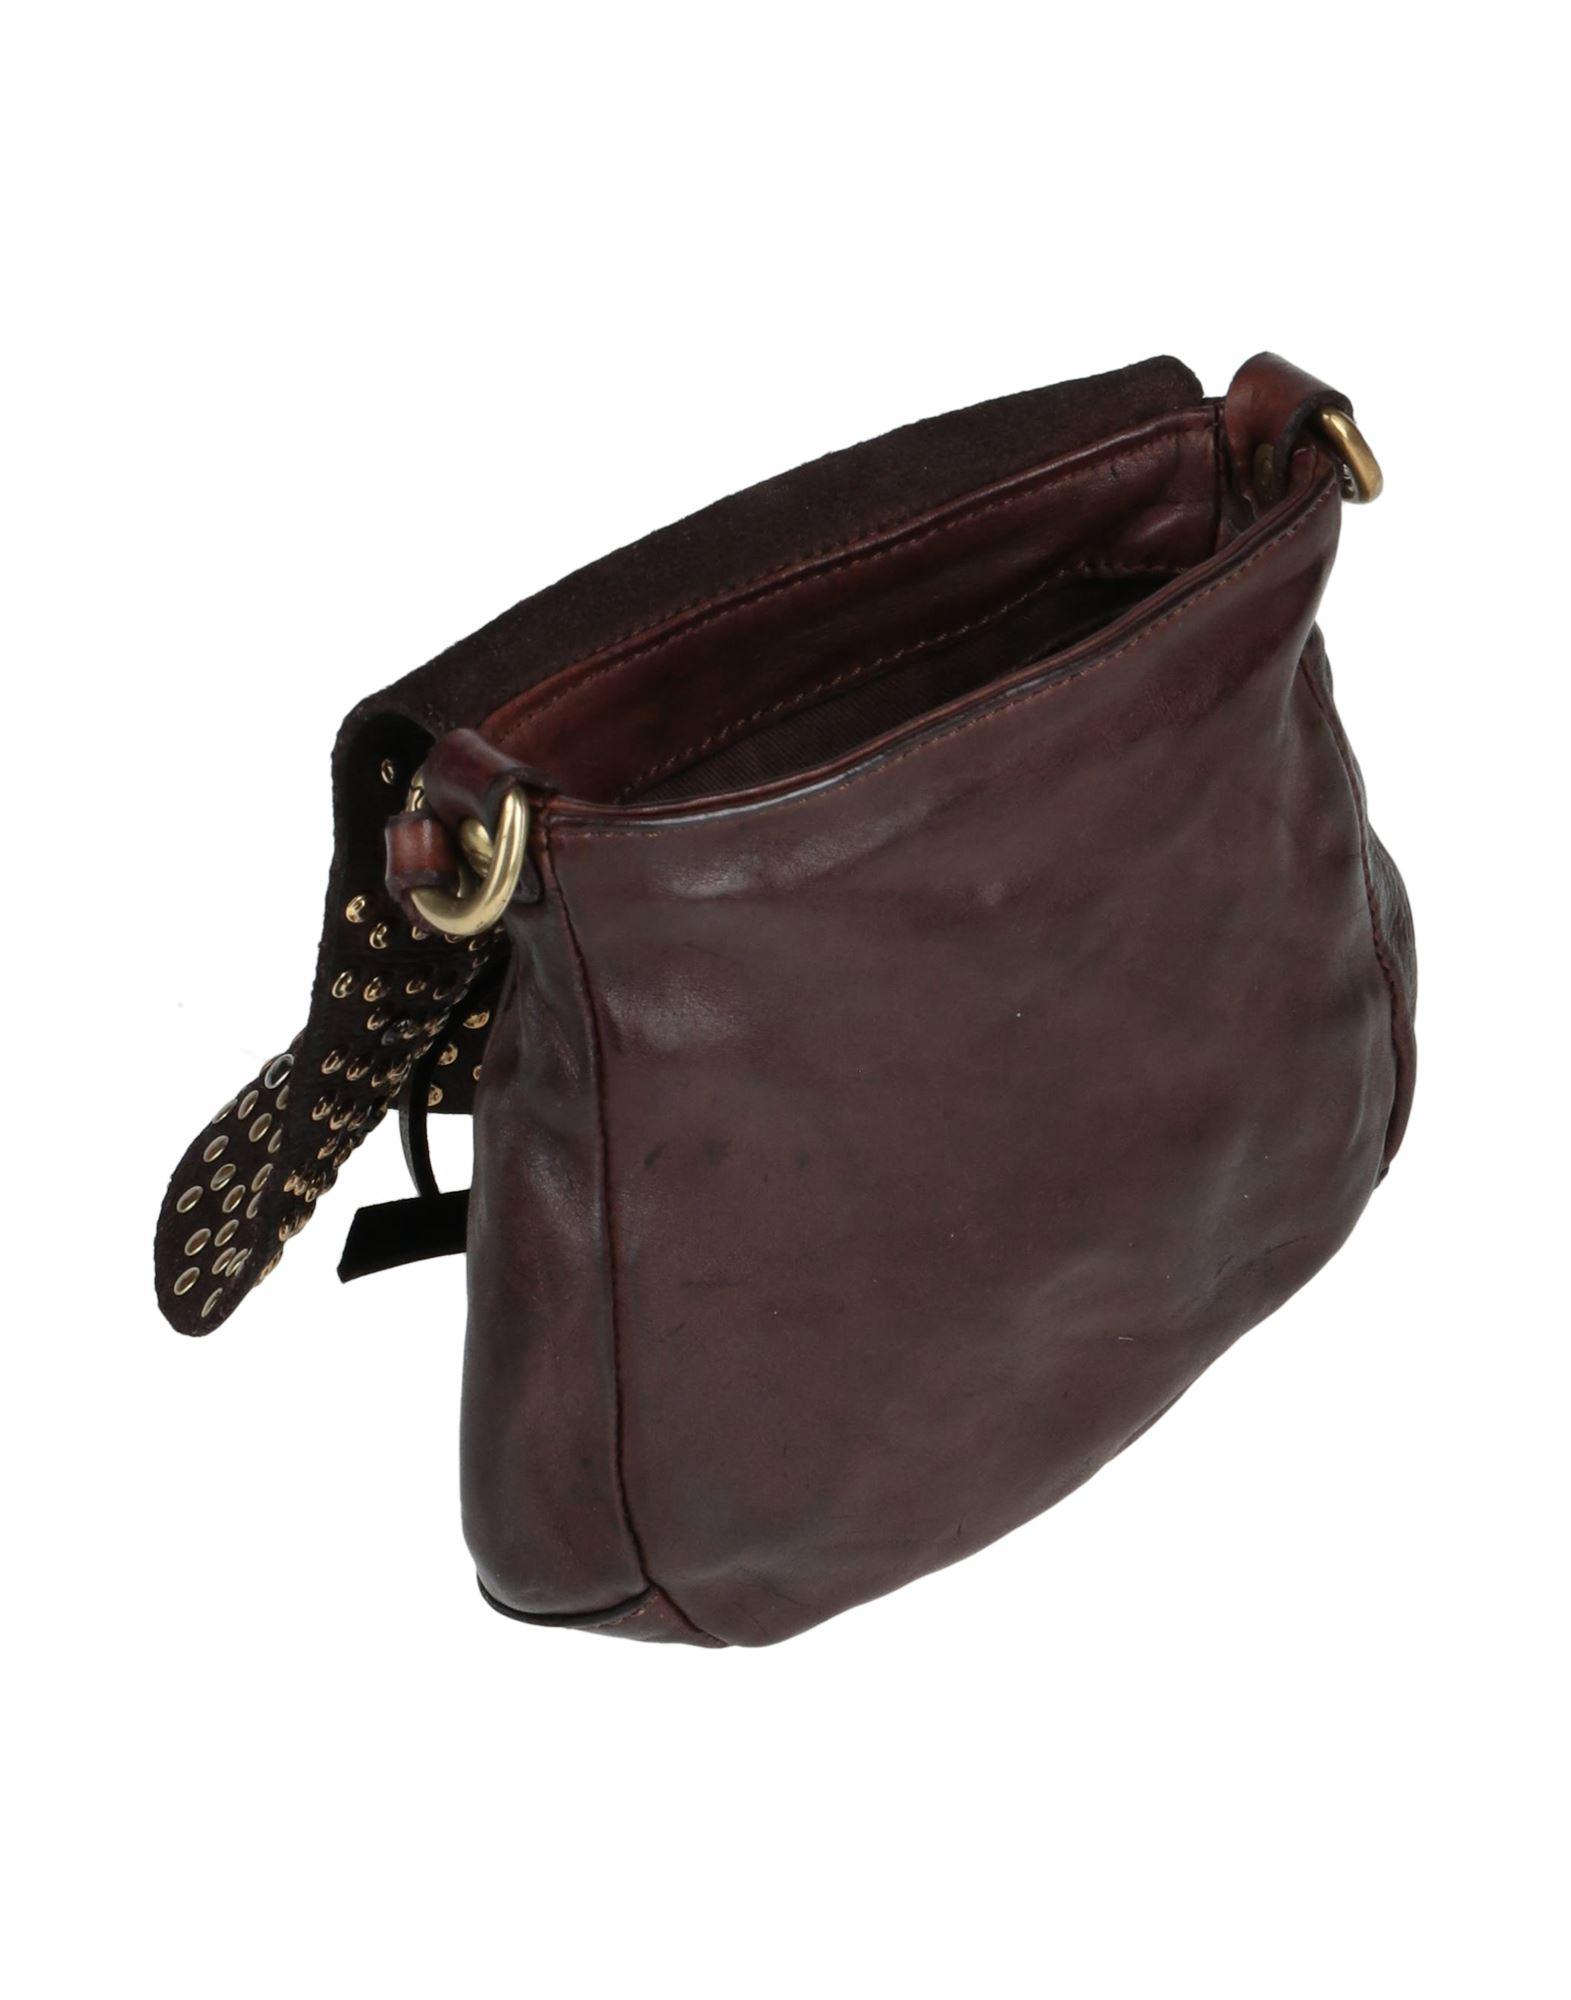 Campomaggi Leather Cross-body Bag in Dark Brown (Brown) | Lyst UK